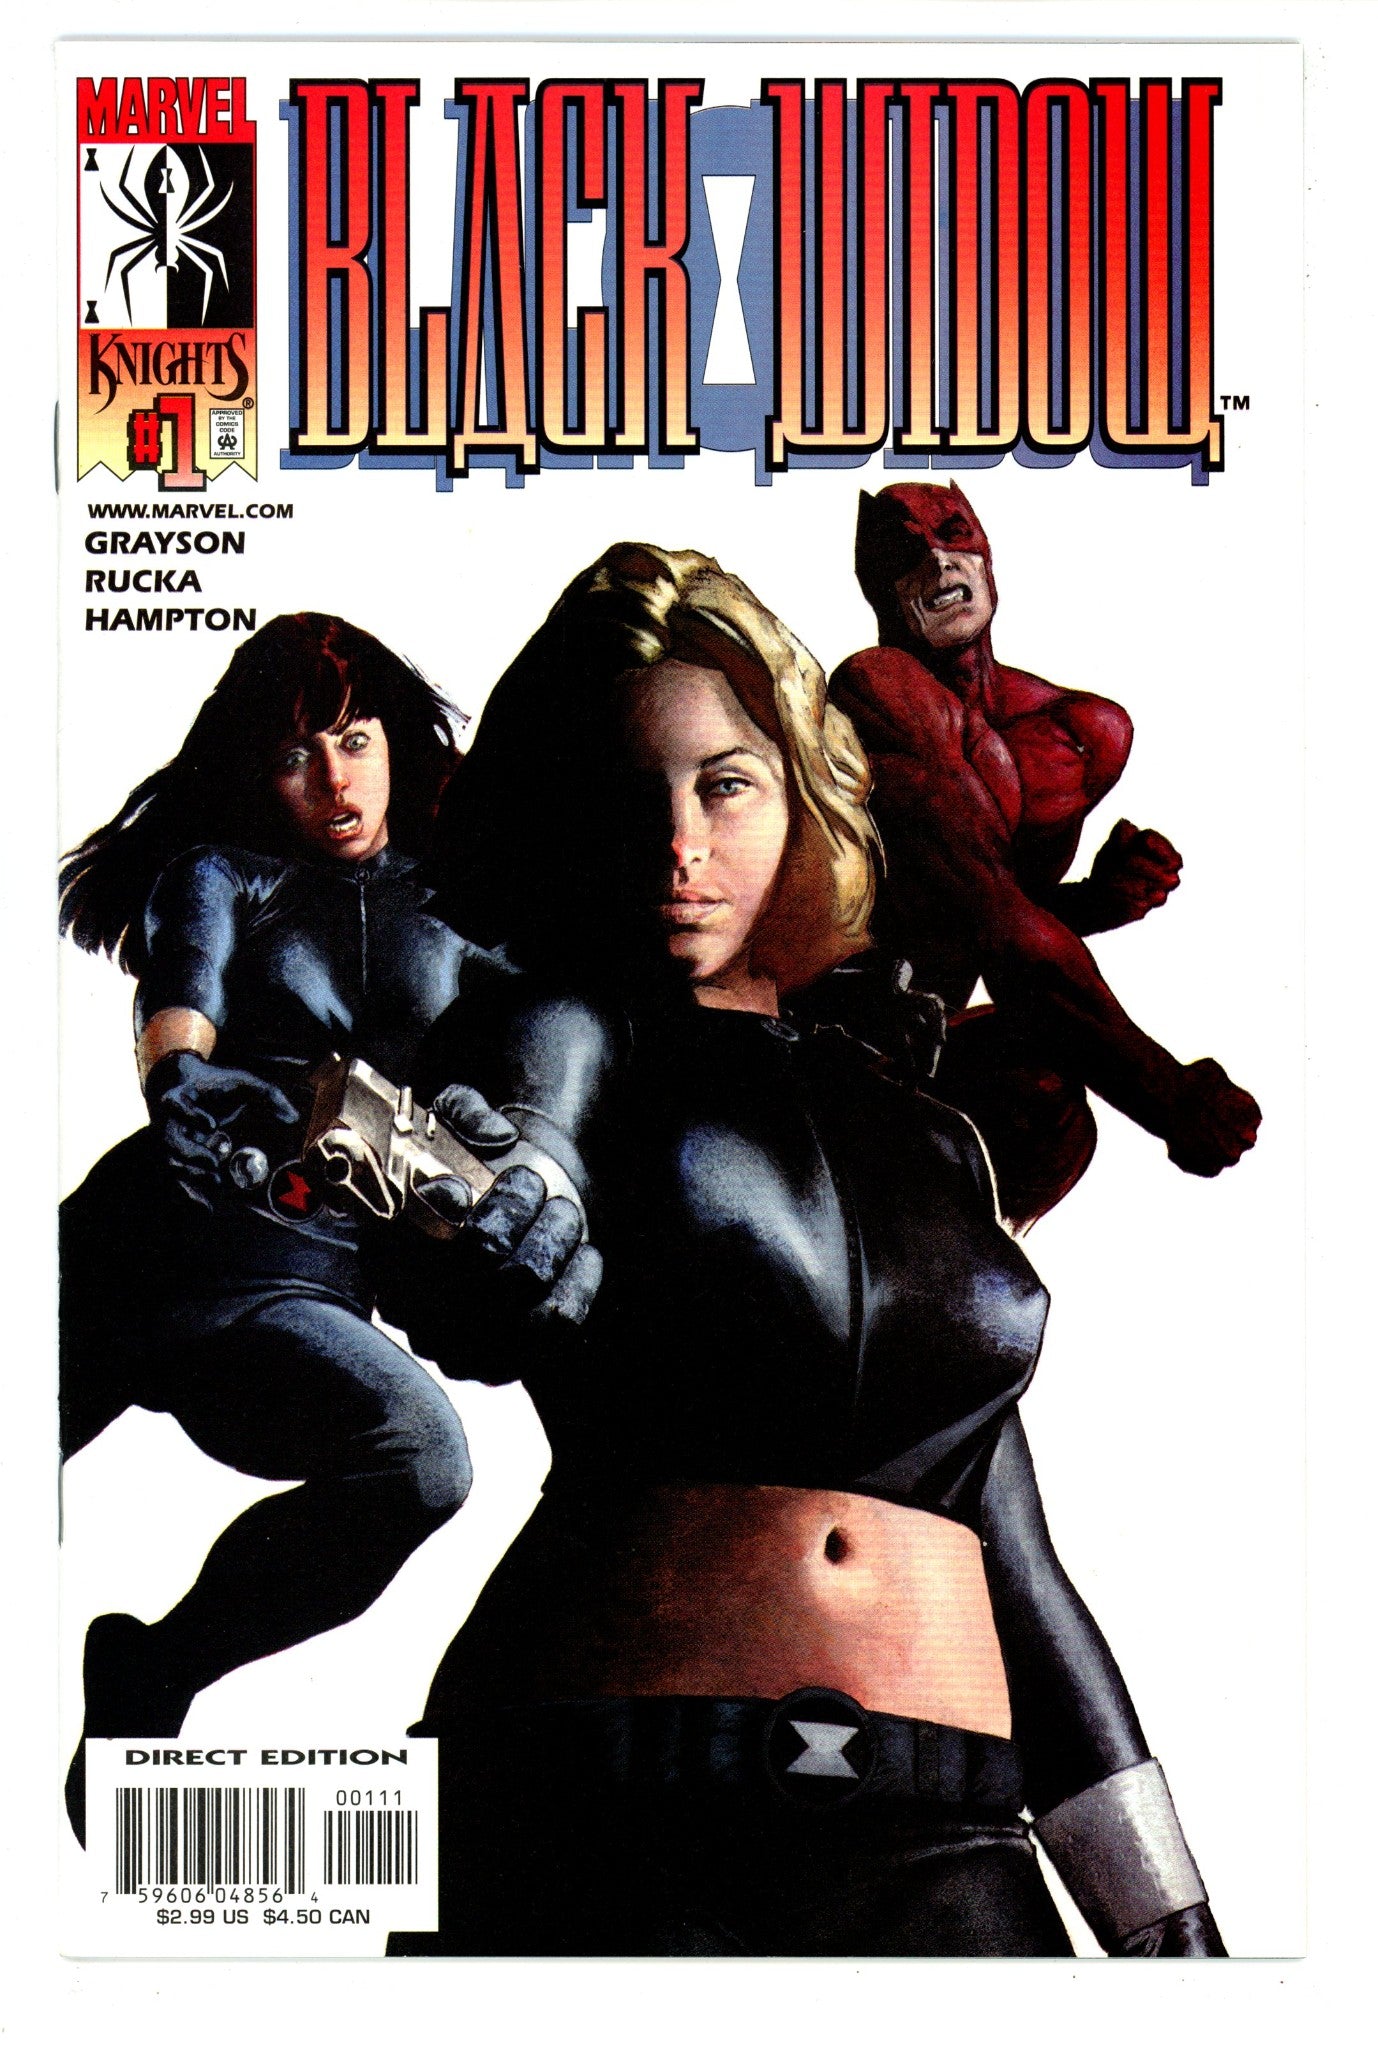 Black Widow Vol 2 1 VF/NM (9.0) (2001) 